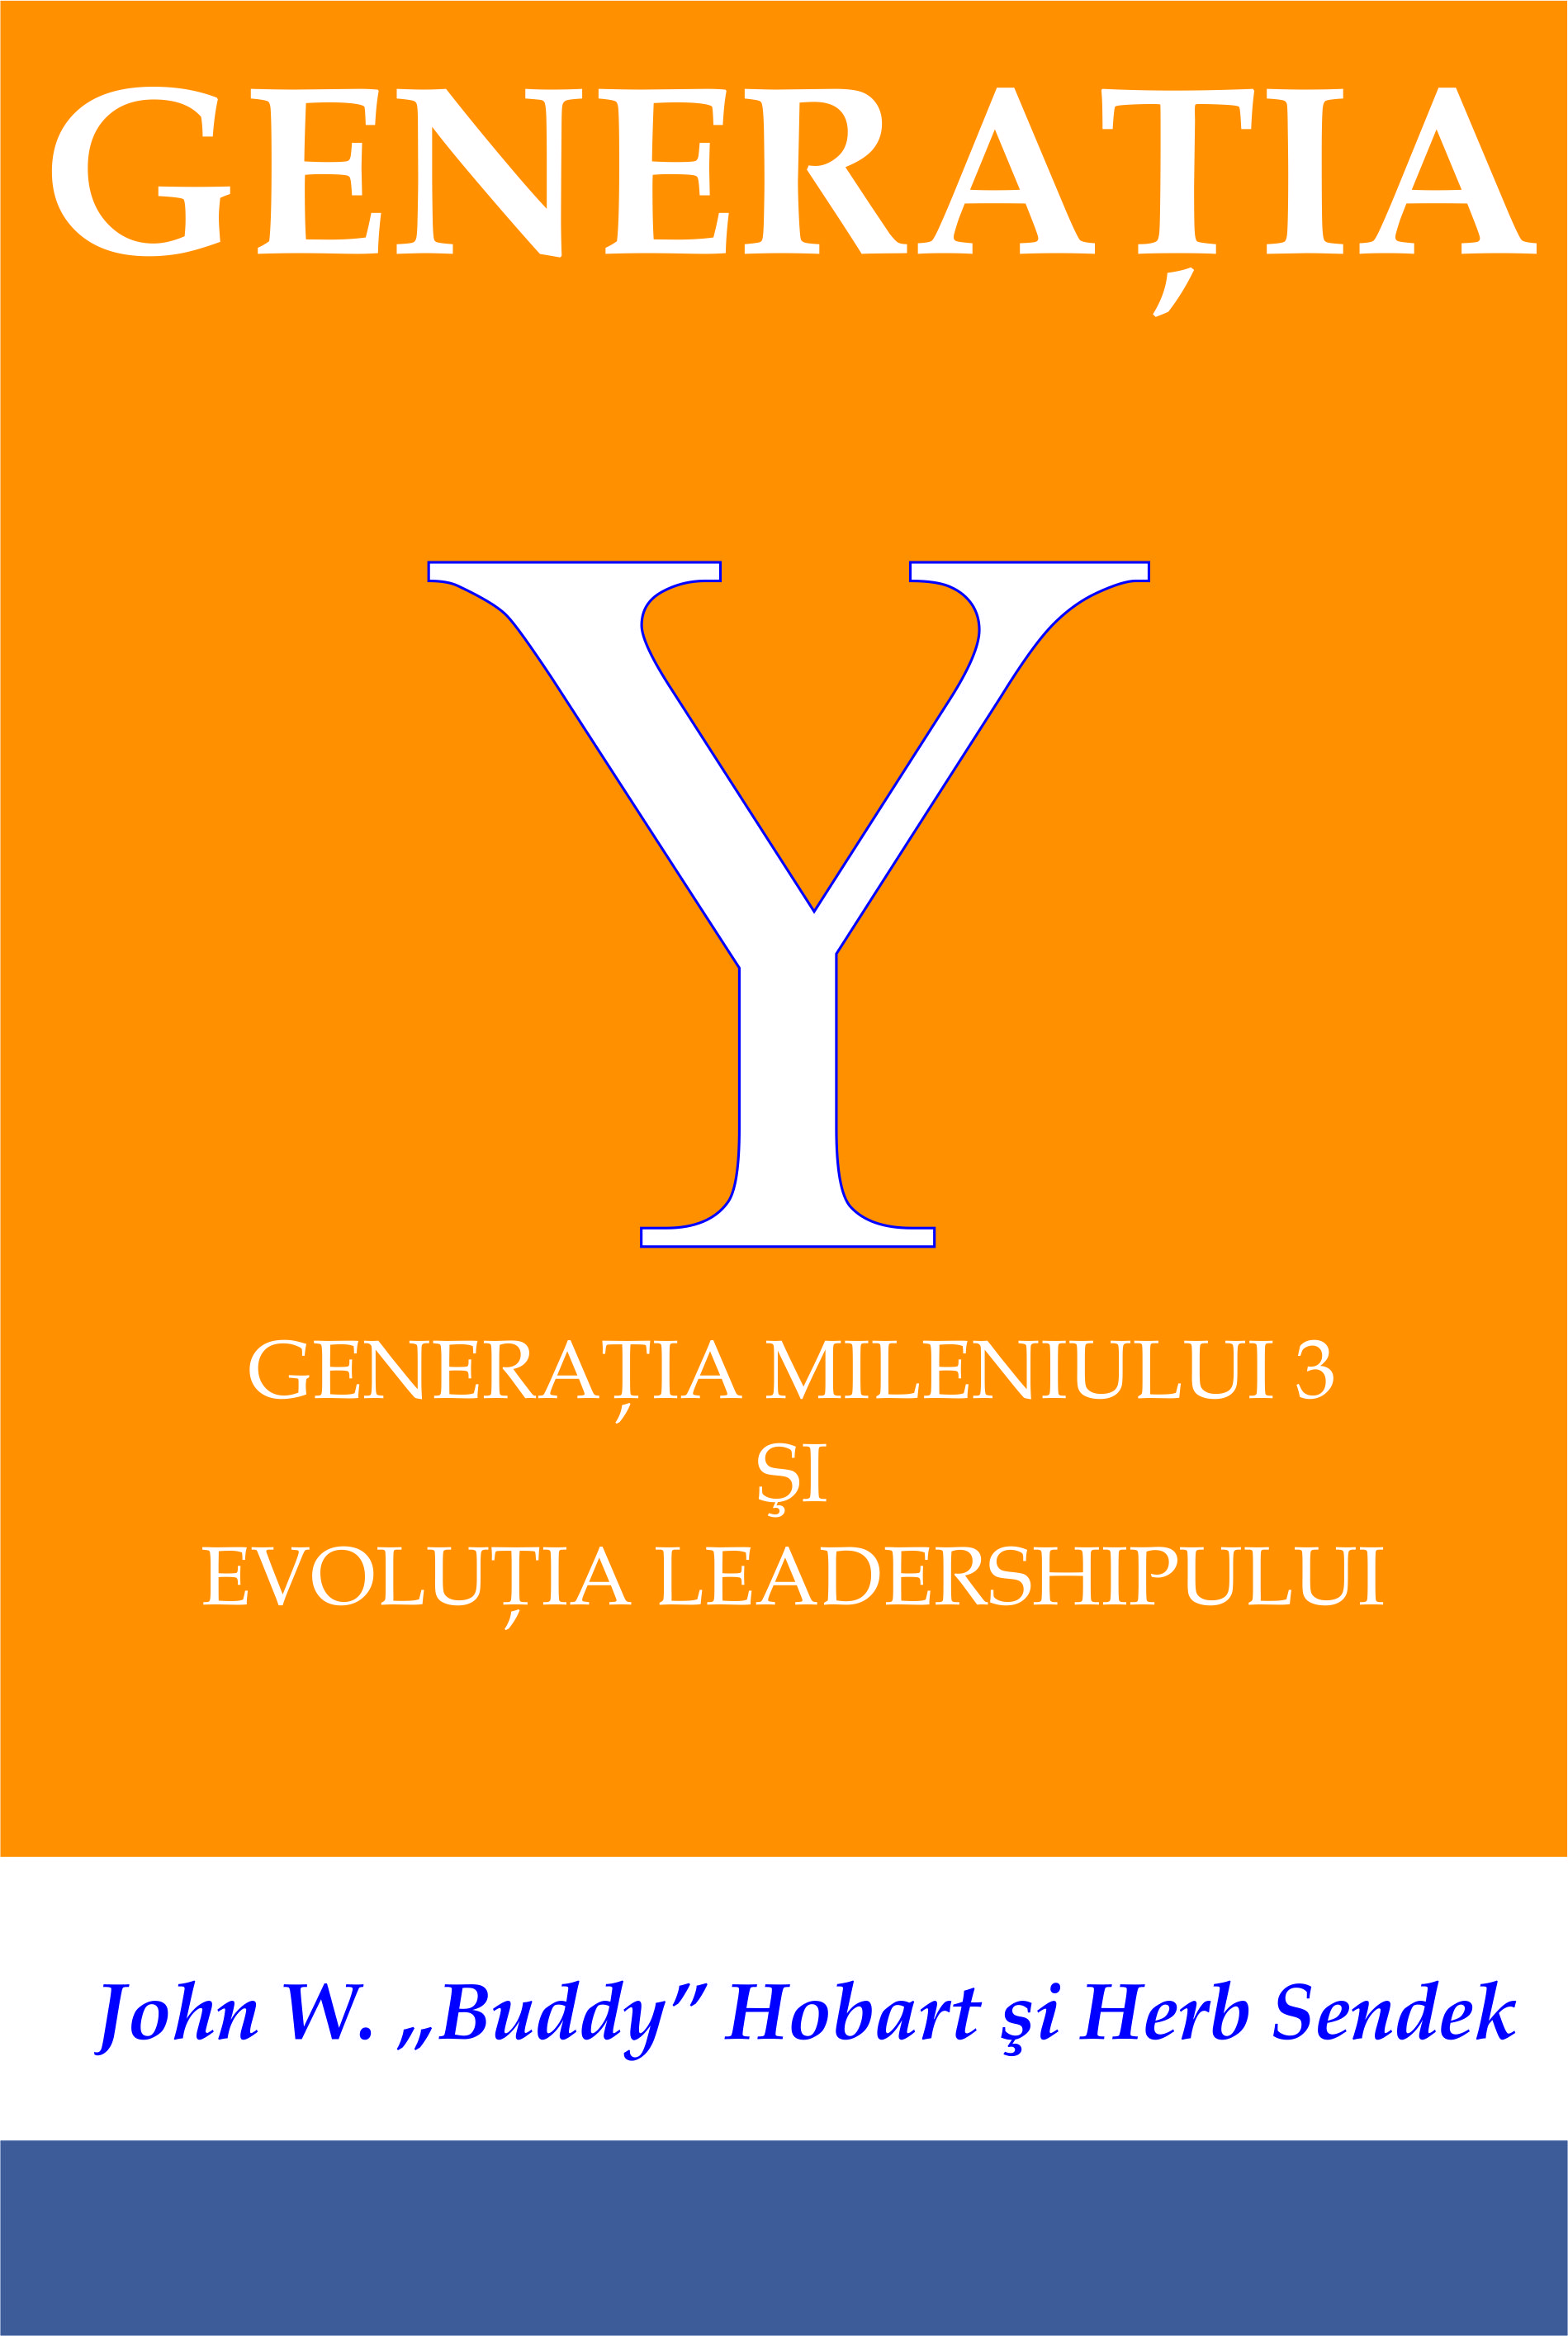 Generatia Y | John W. Buddy Hobart, Herb Sendek BMI Publishing 2022